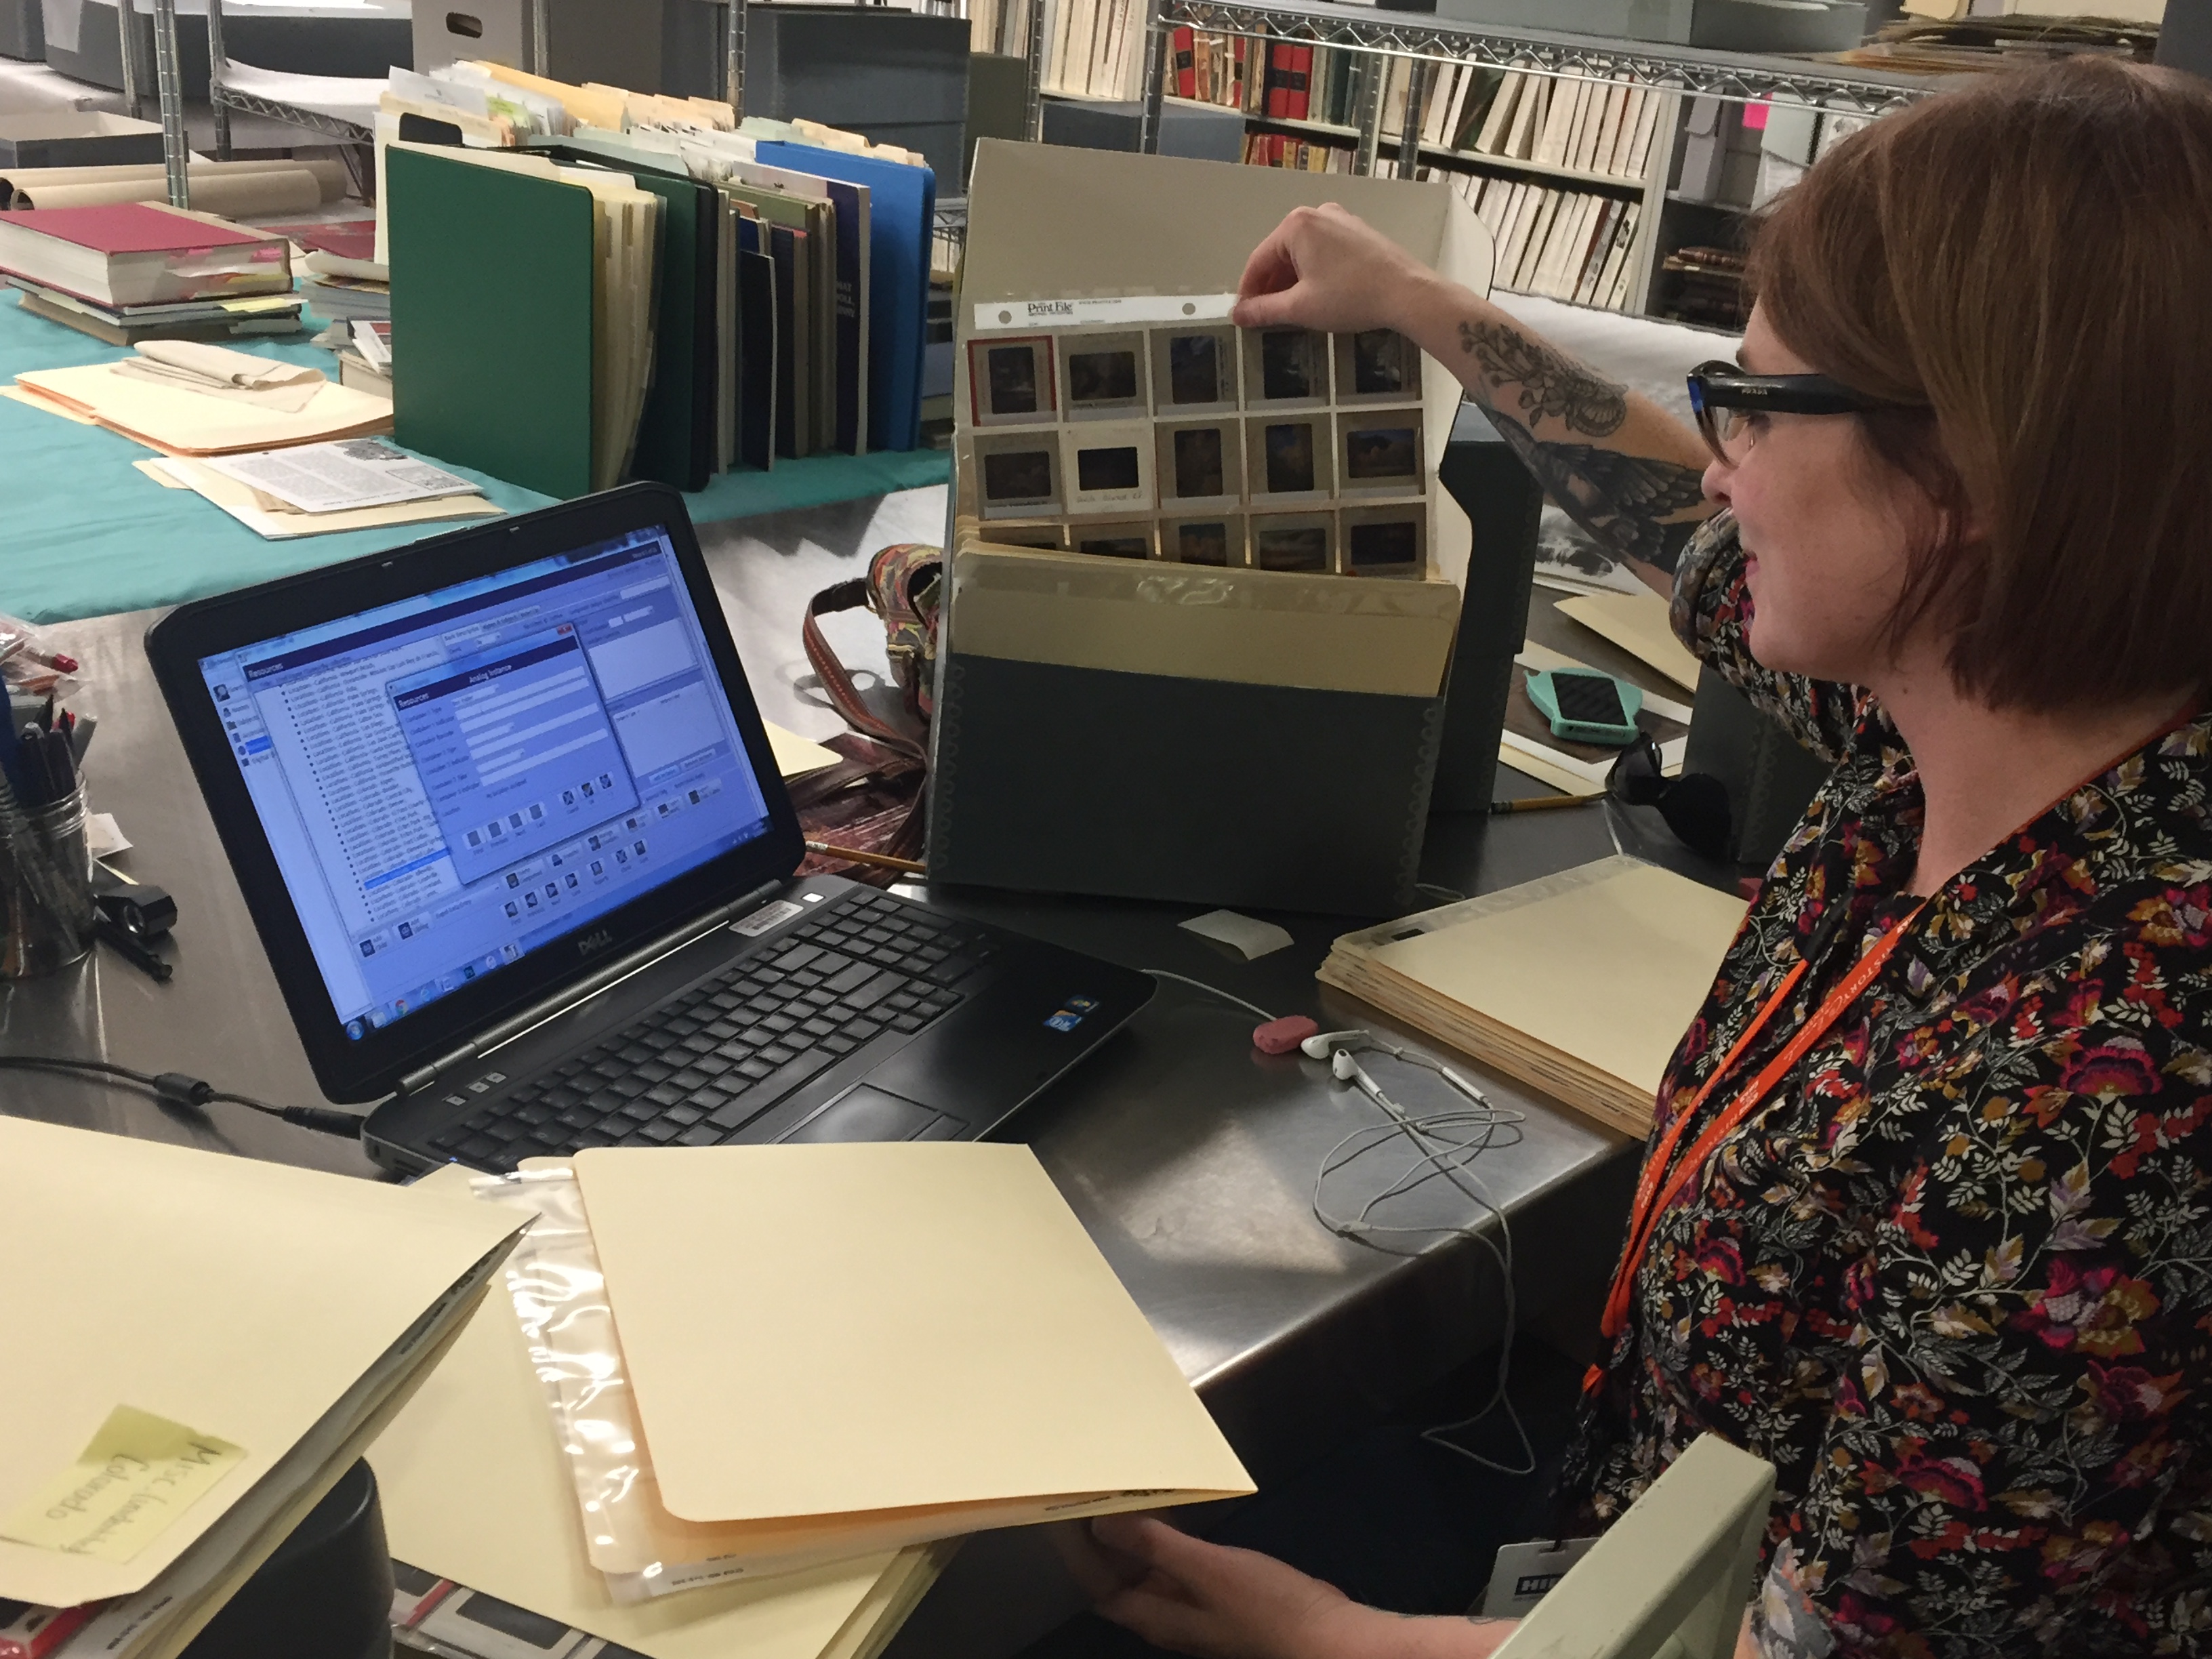 Archivist Adrienne Evans holds up a sheet of negatives. An open laptop and various manila folders litter her desk.